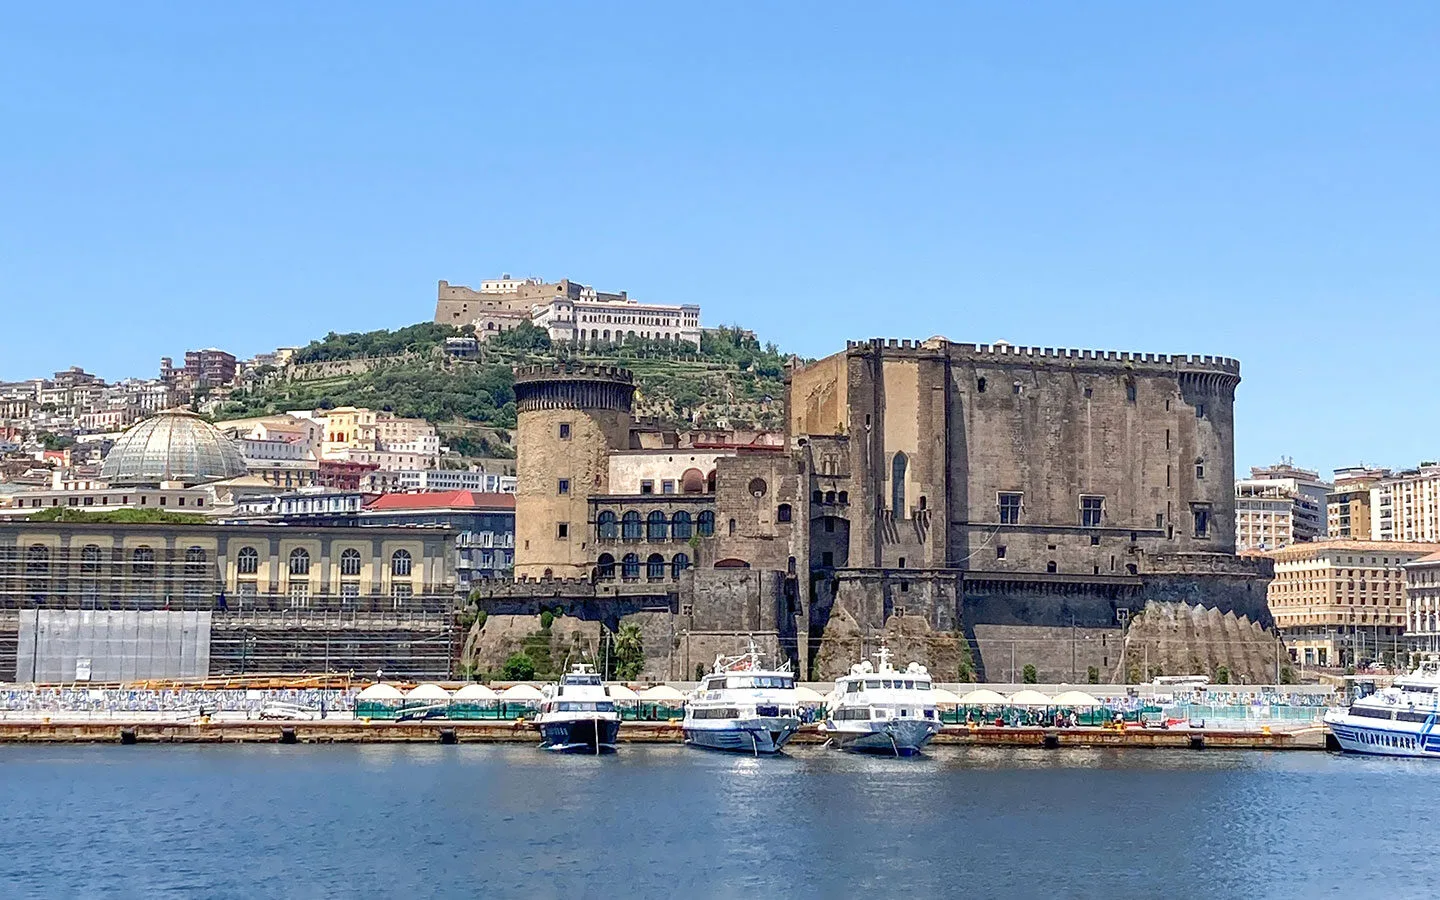 Naples' Molo Beverello port